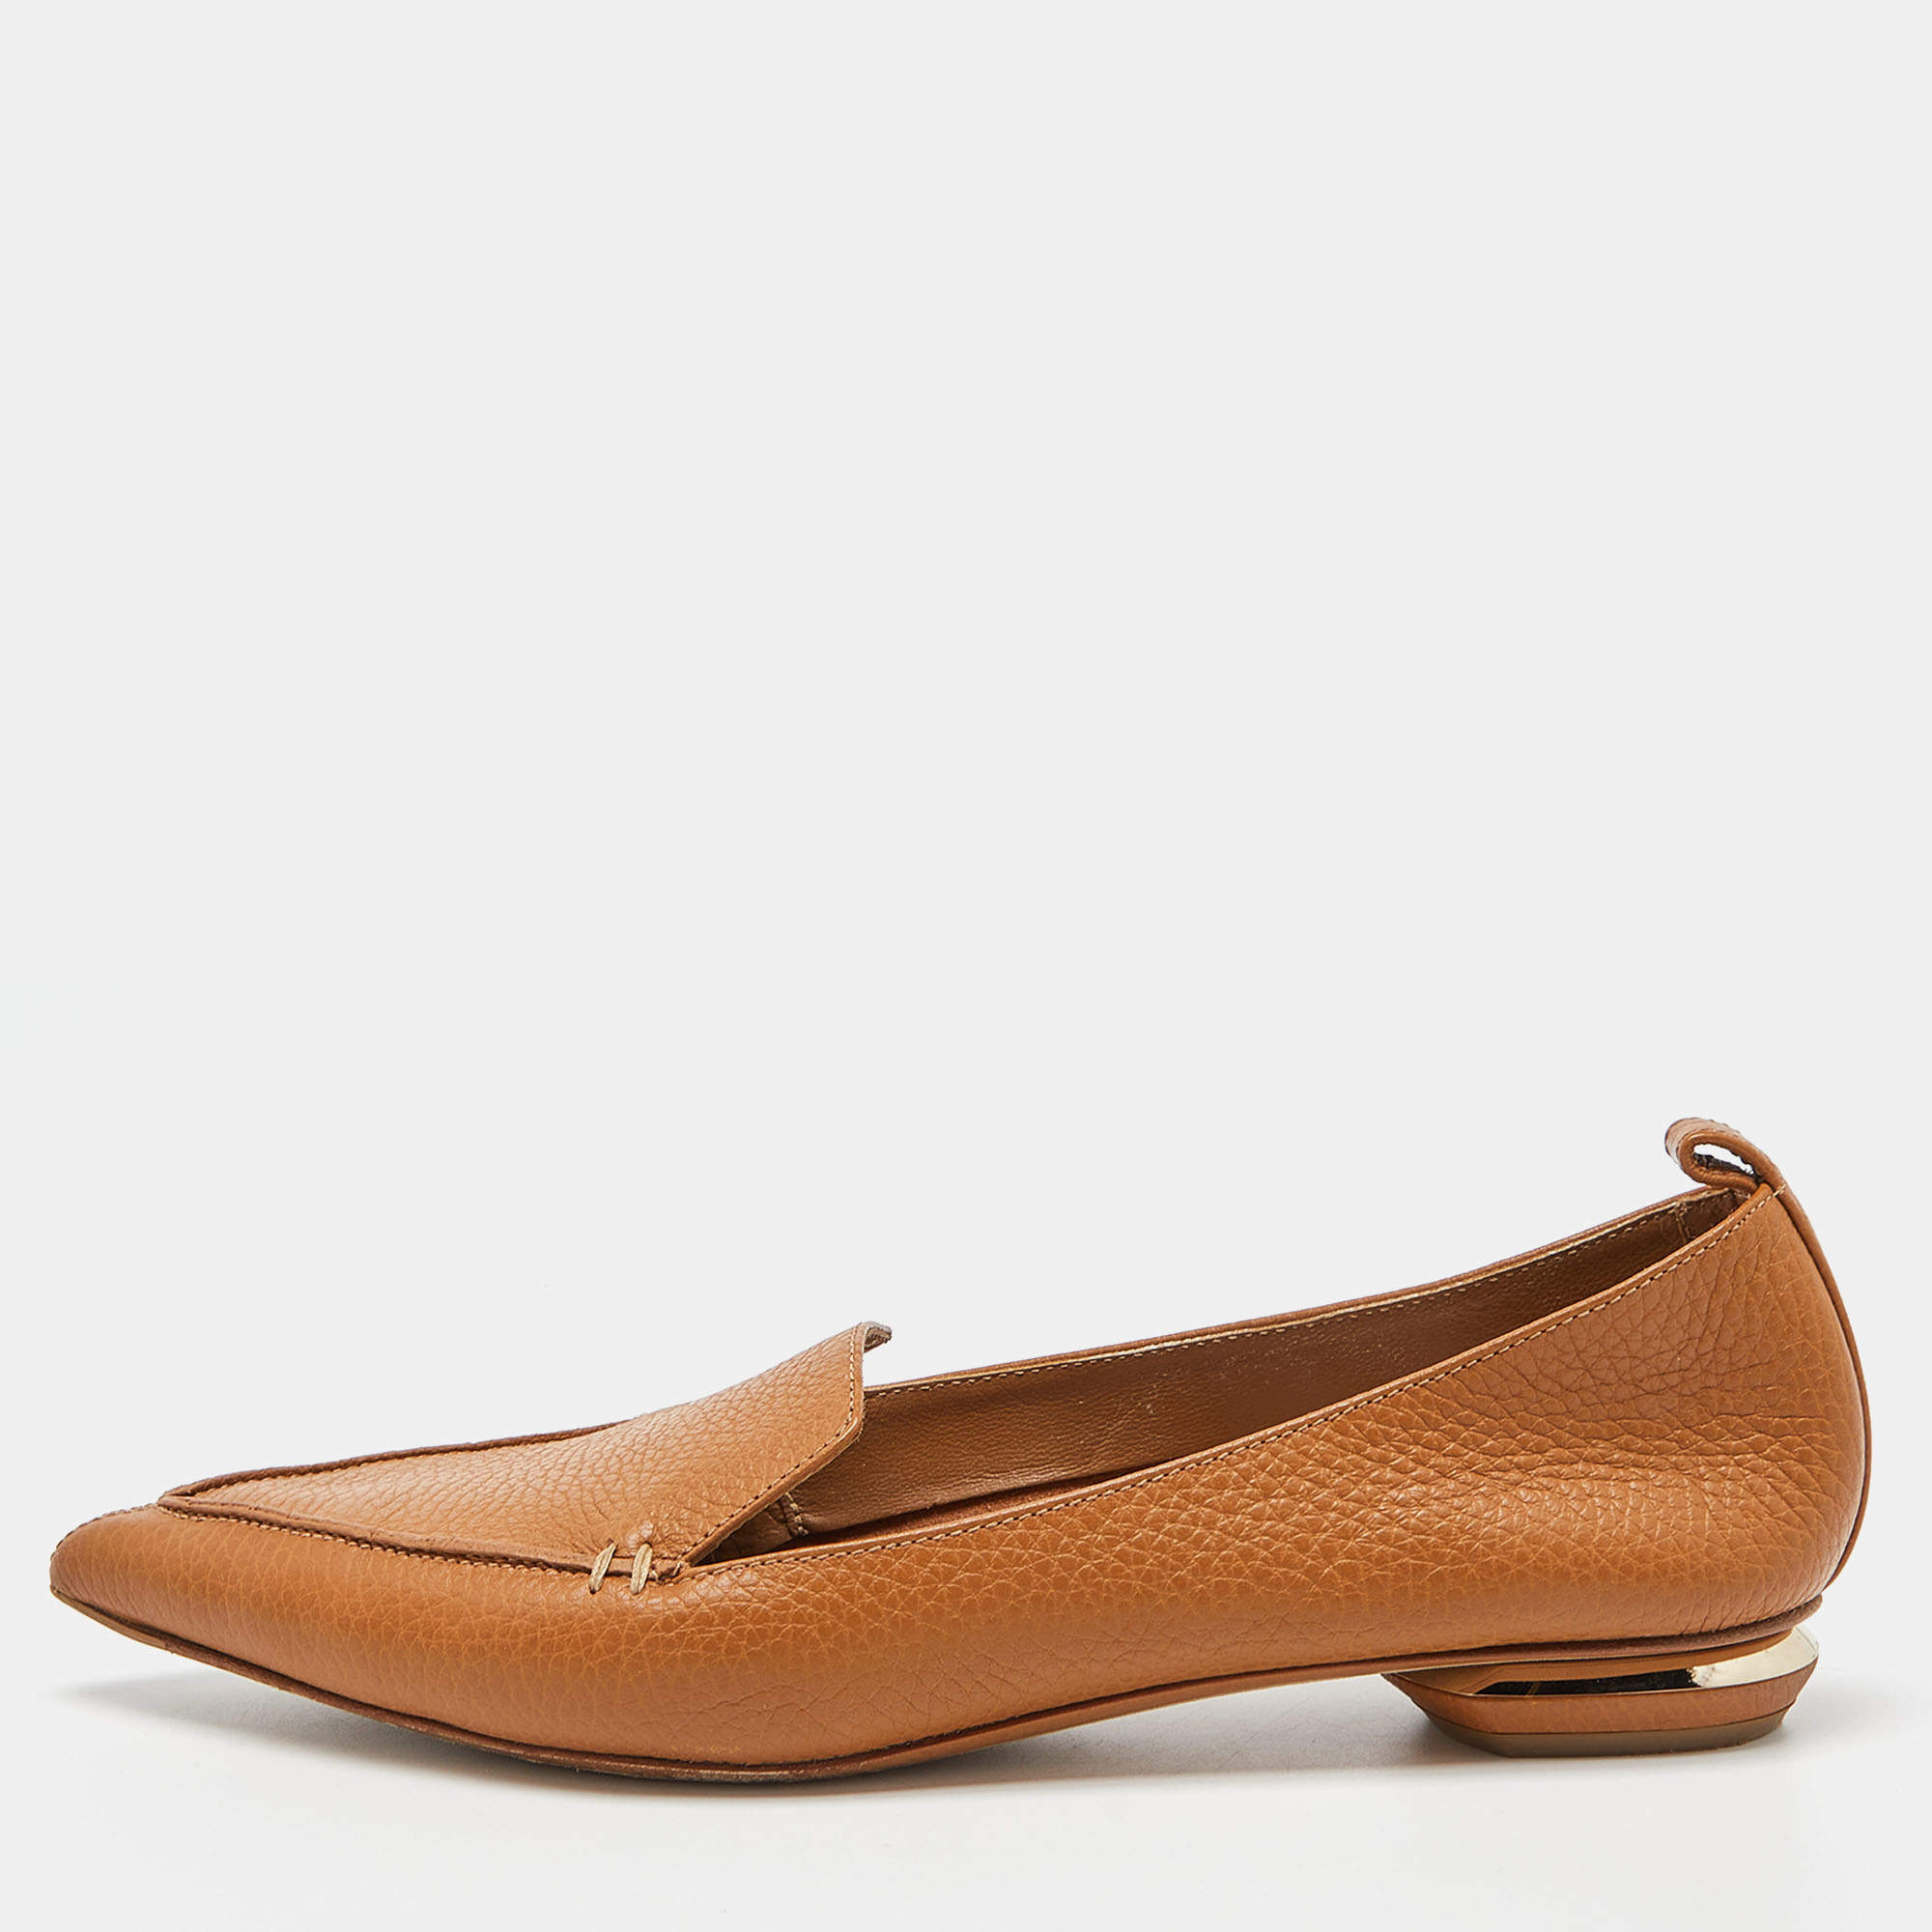 $495 Nicholas Kirkwood BEYA Tan Leather Loafers Flats Size 35.5 5.5